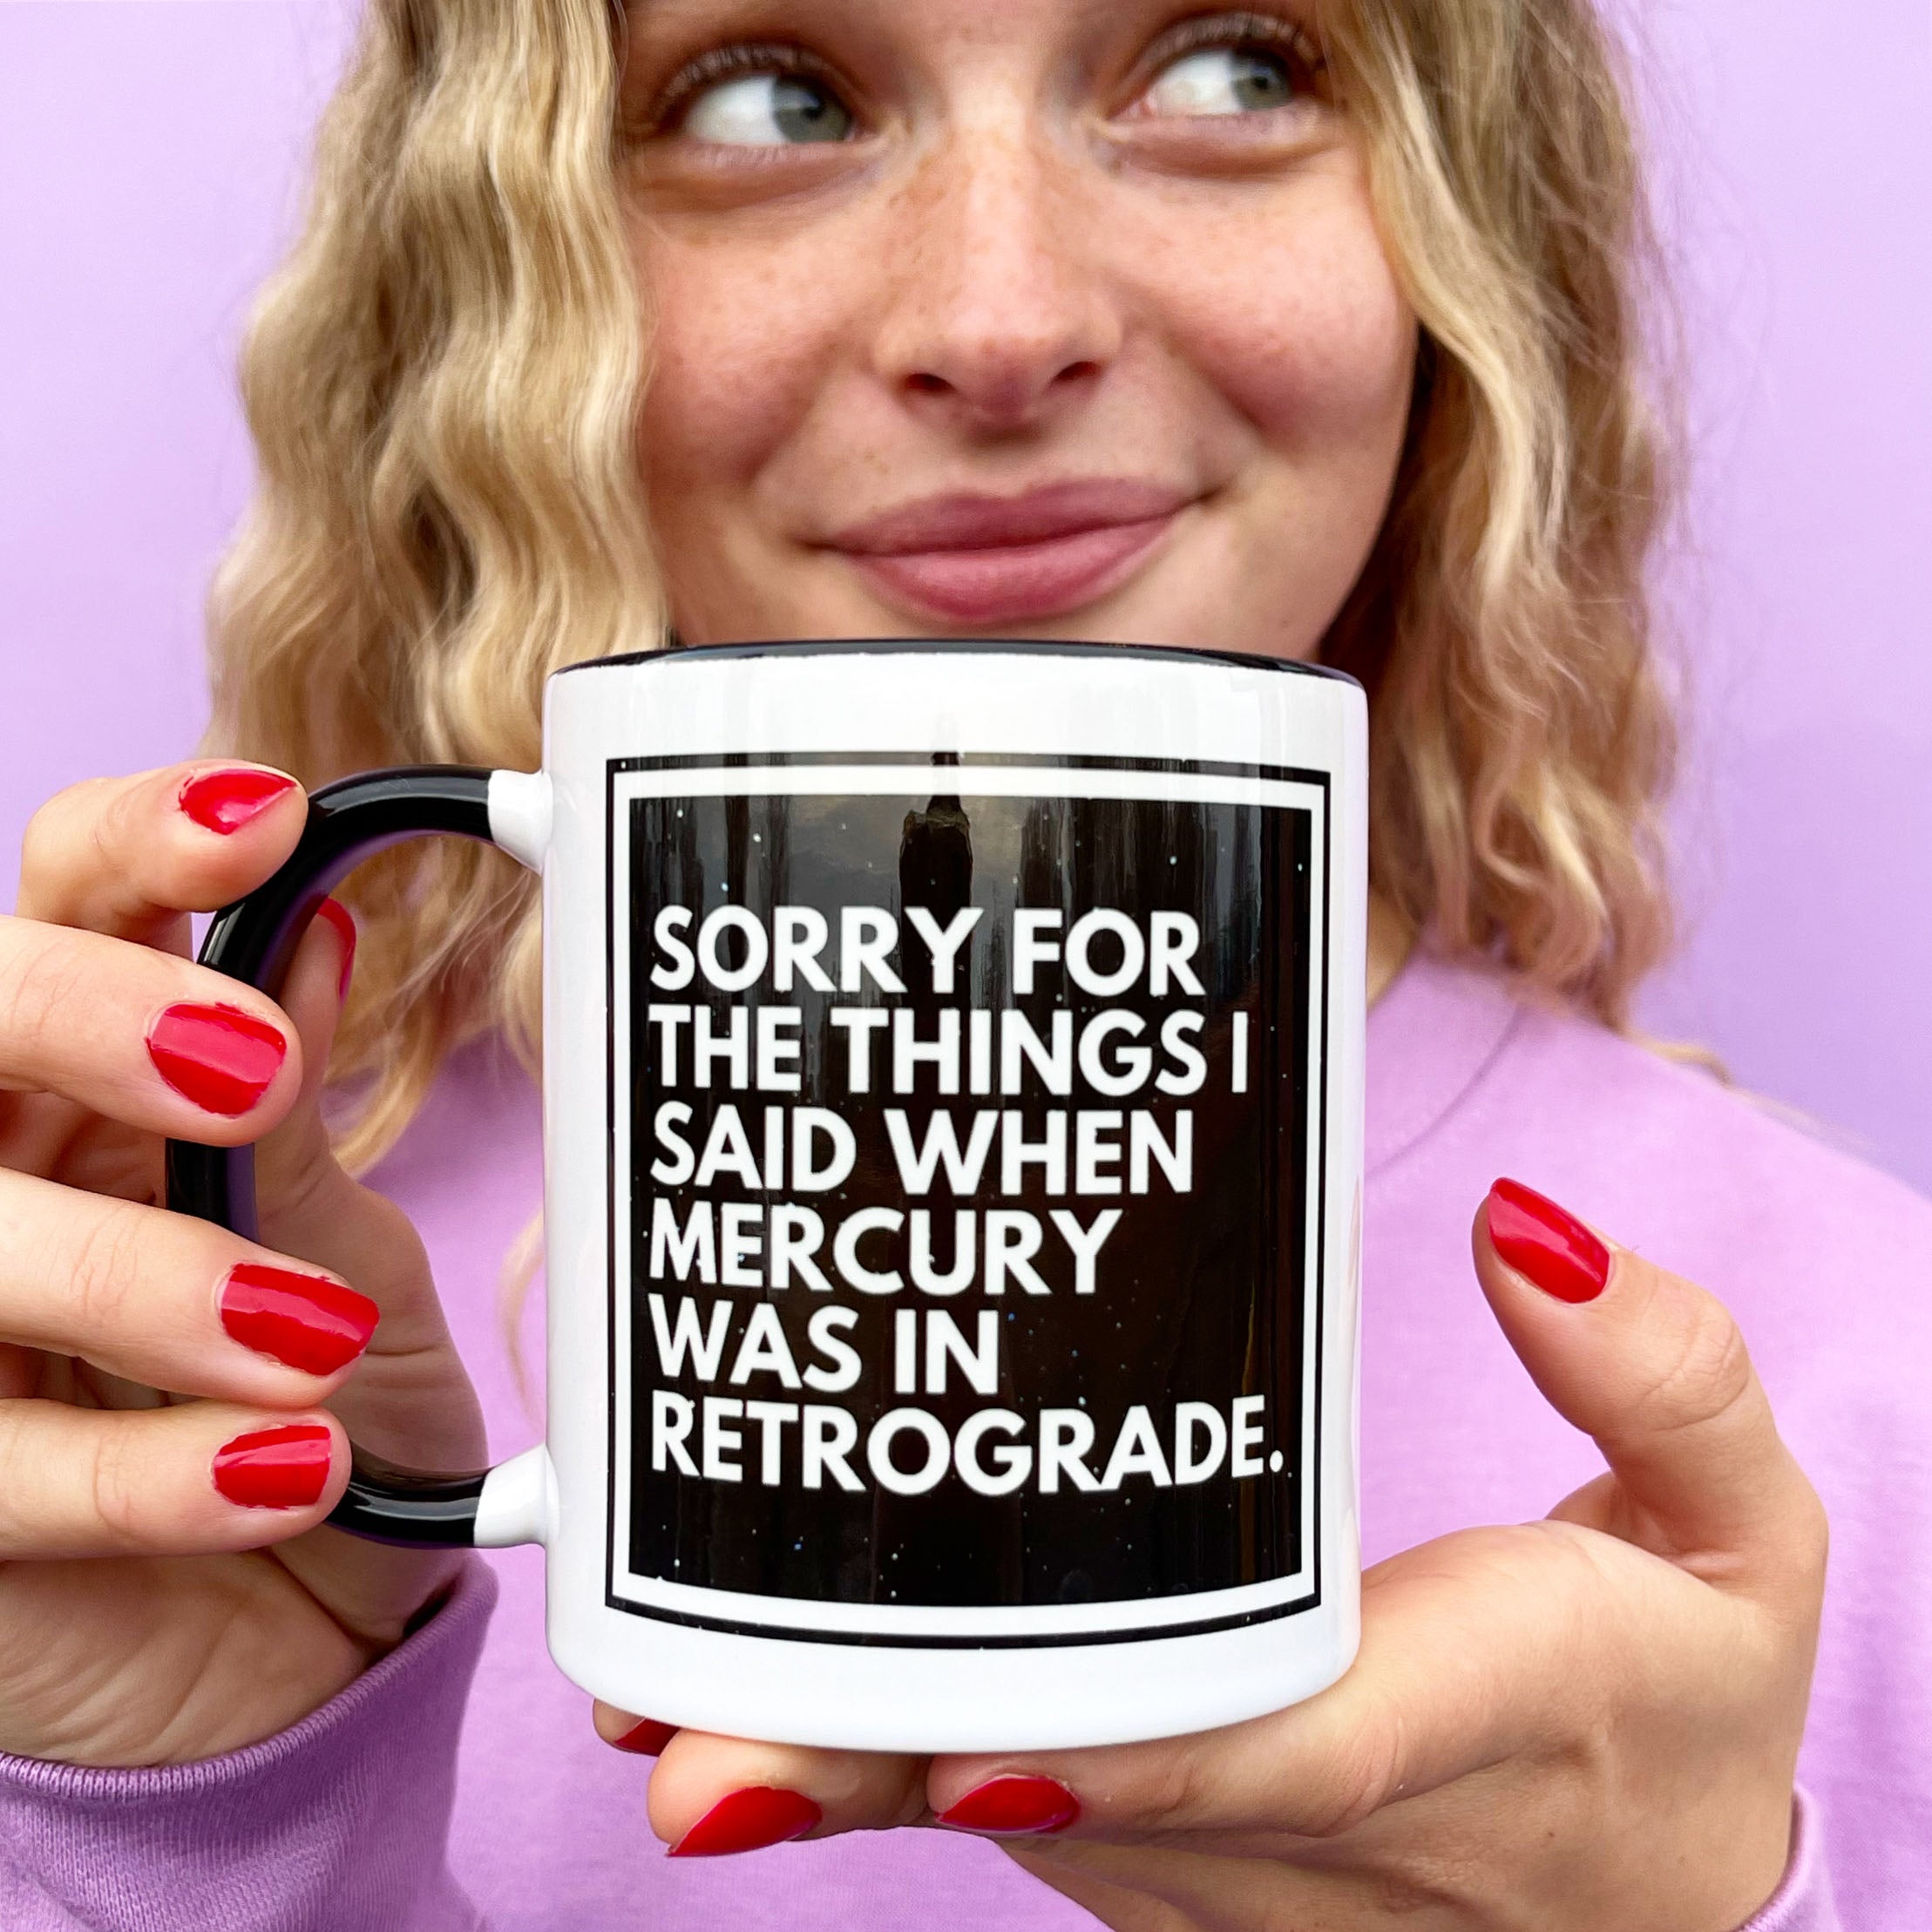 When Mecury was in Retrograde Mug